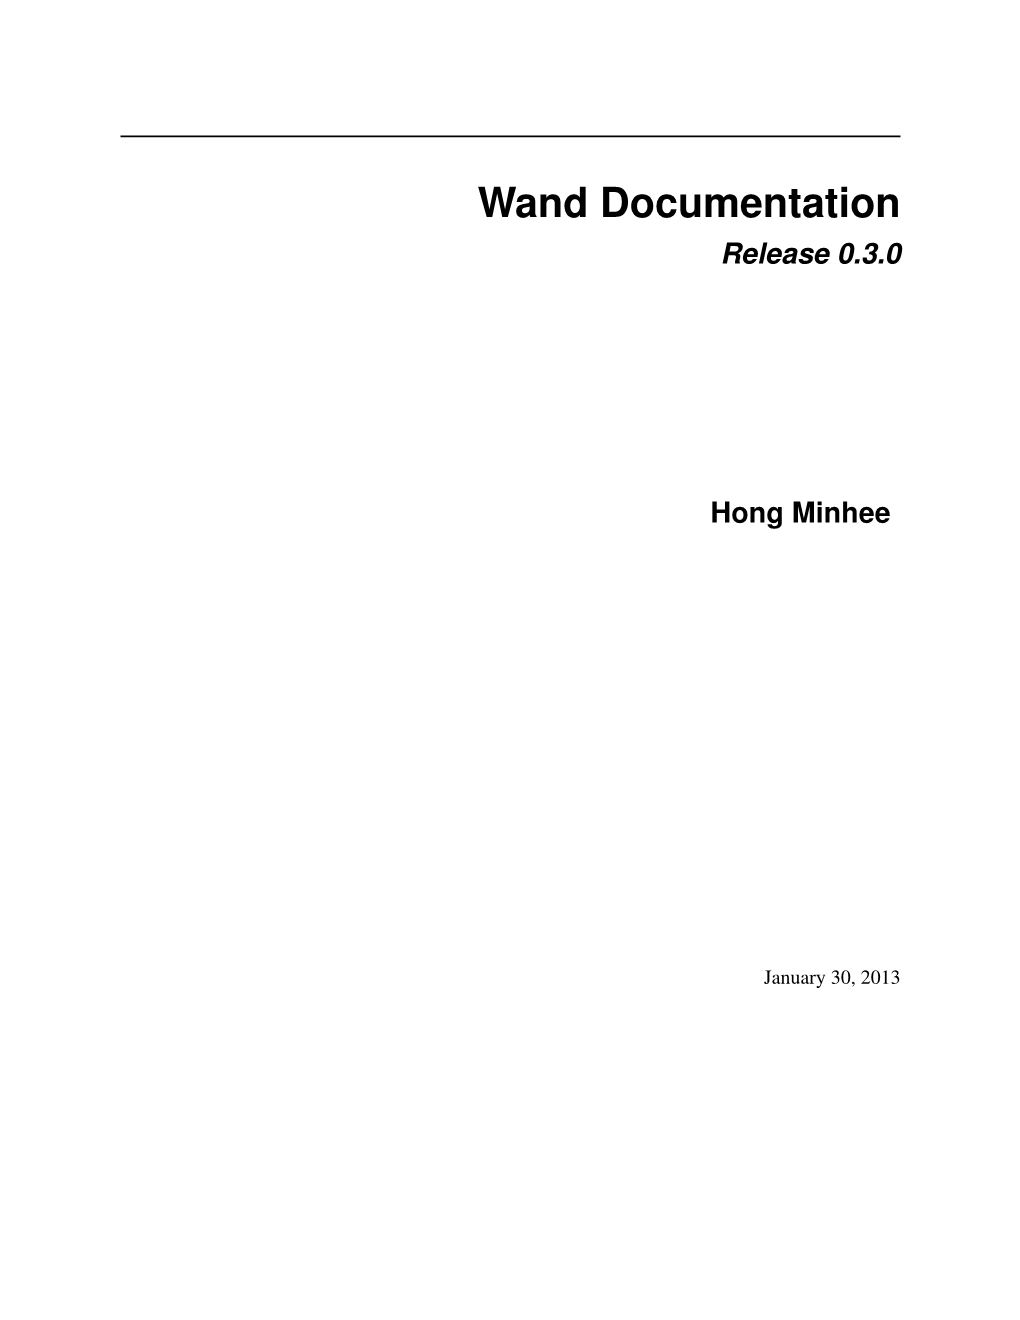 Wand Documentation Release 0.3.0